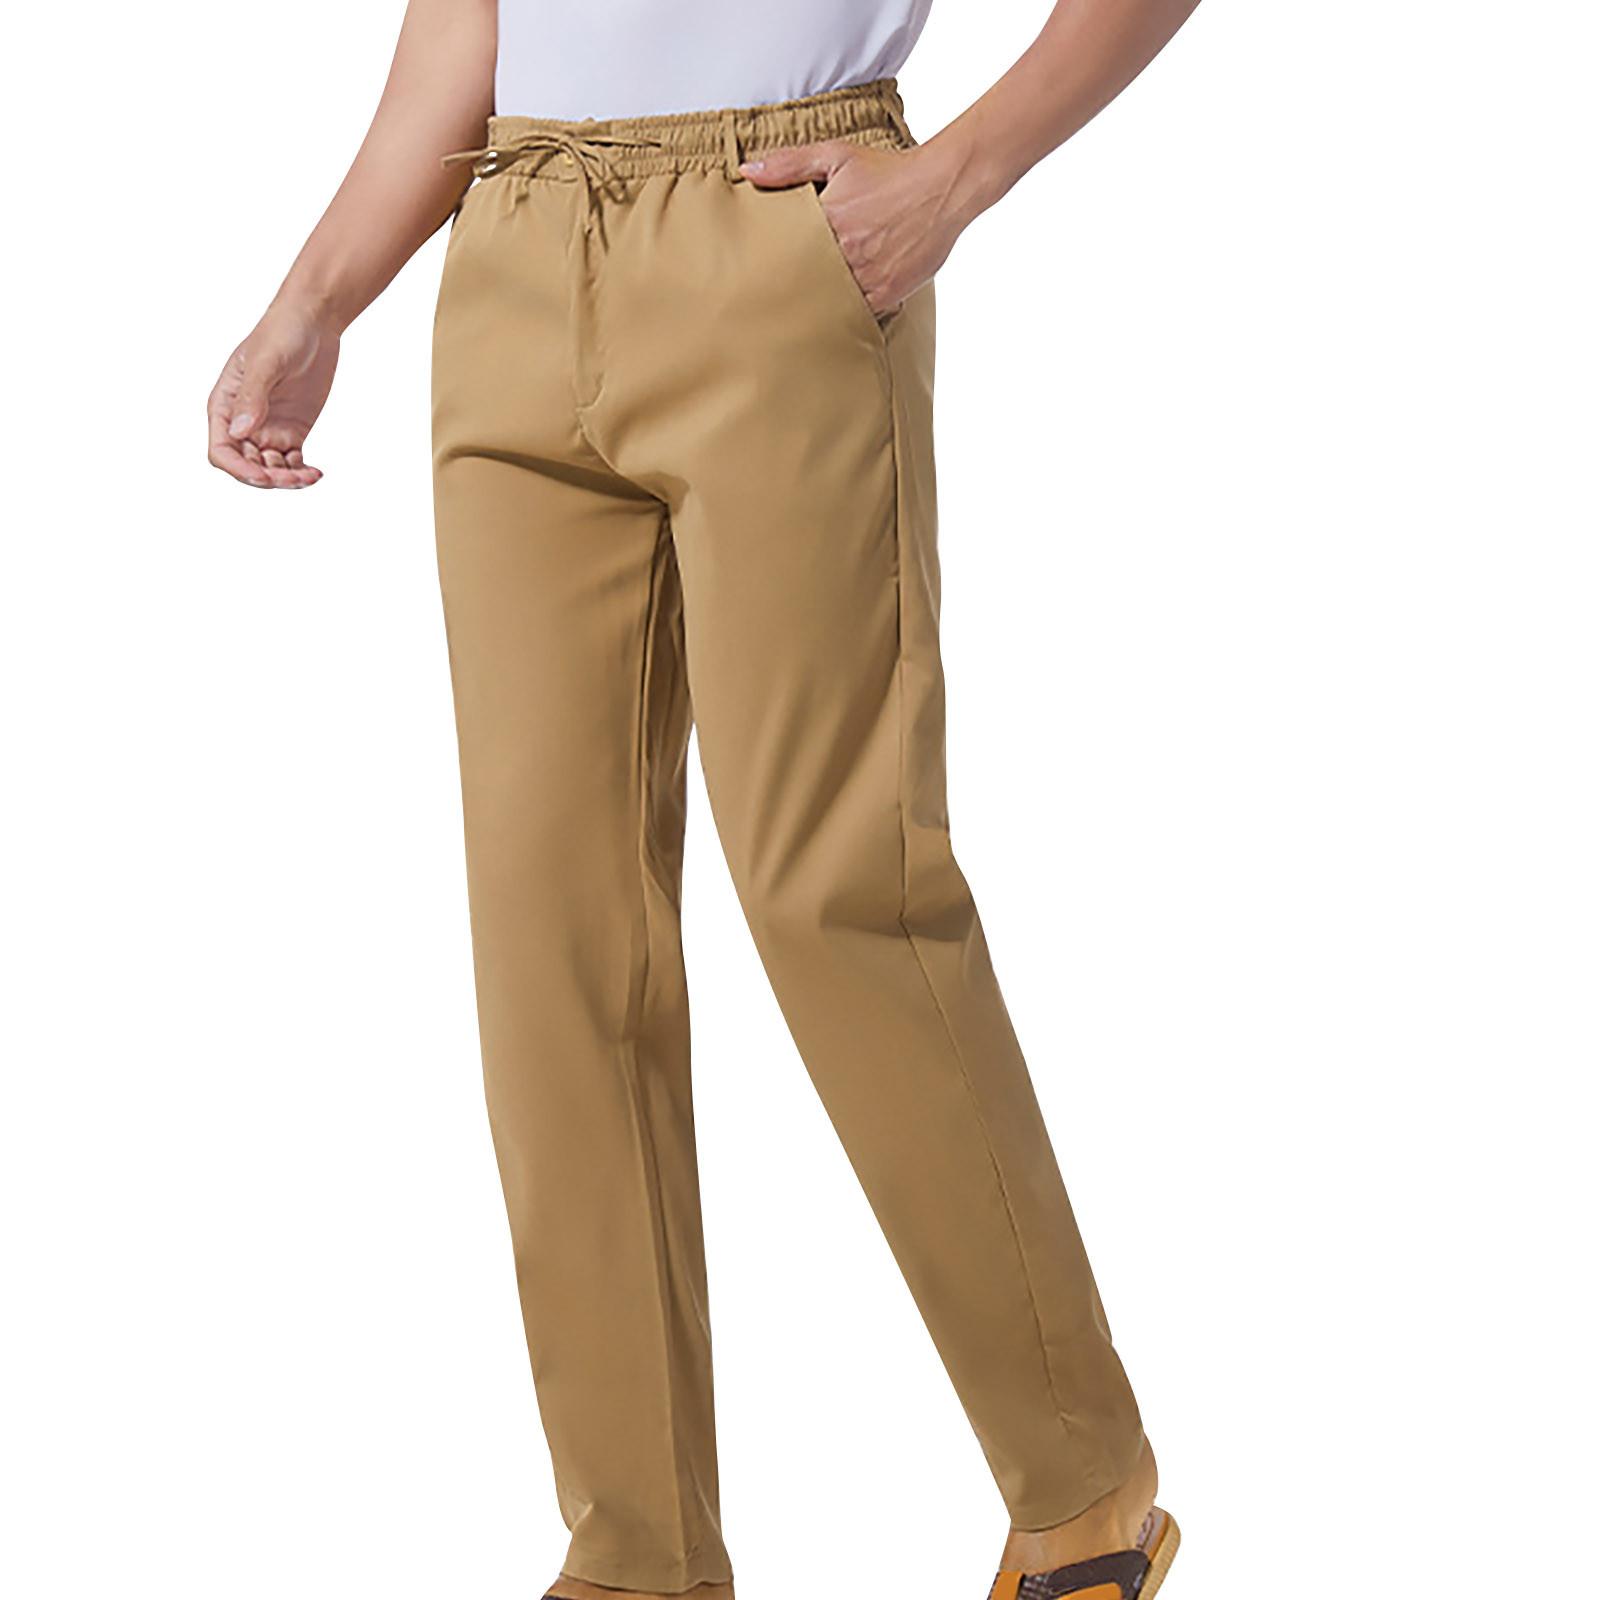 Tdoqot Chinos Pants Men- Drawstring Comftable Elastic Waist Slim Casual Cotton Mens Pants Khaki - image 1 of 6